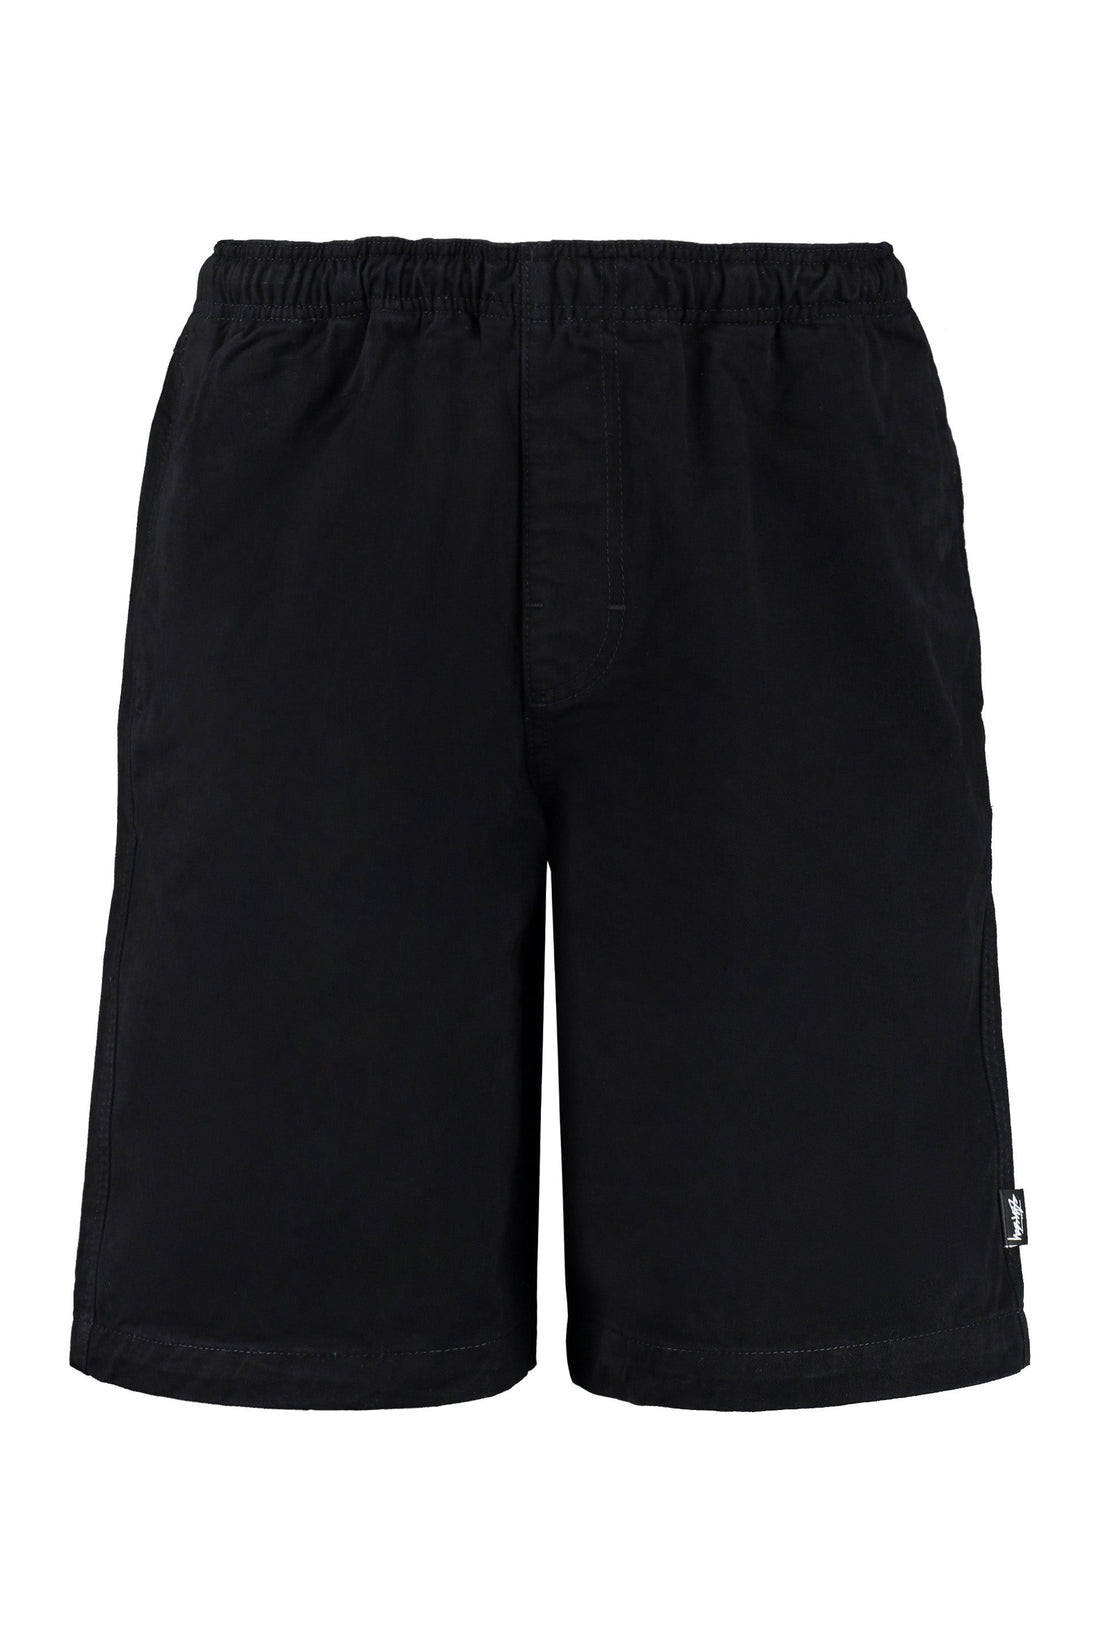 Stüssy-OUTLET-SALE-Brushed Beach cotton shorts-ARCHIVIST